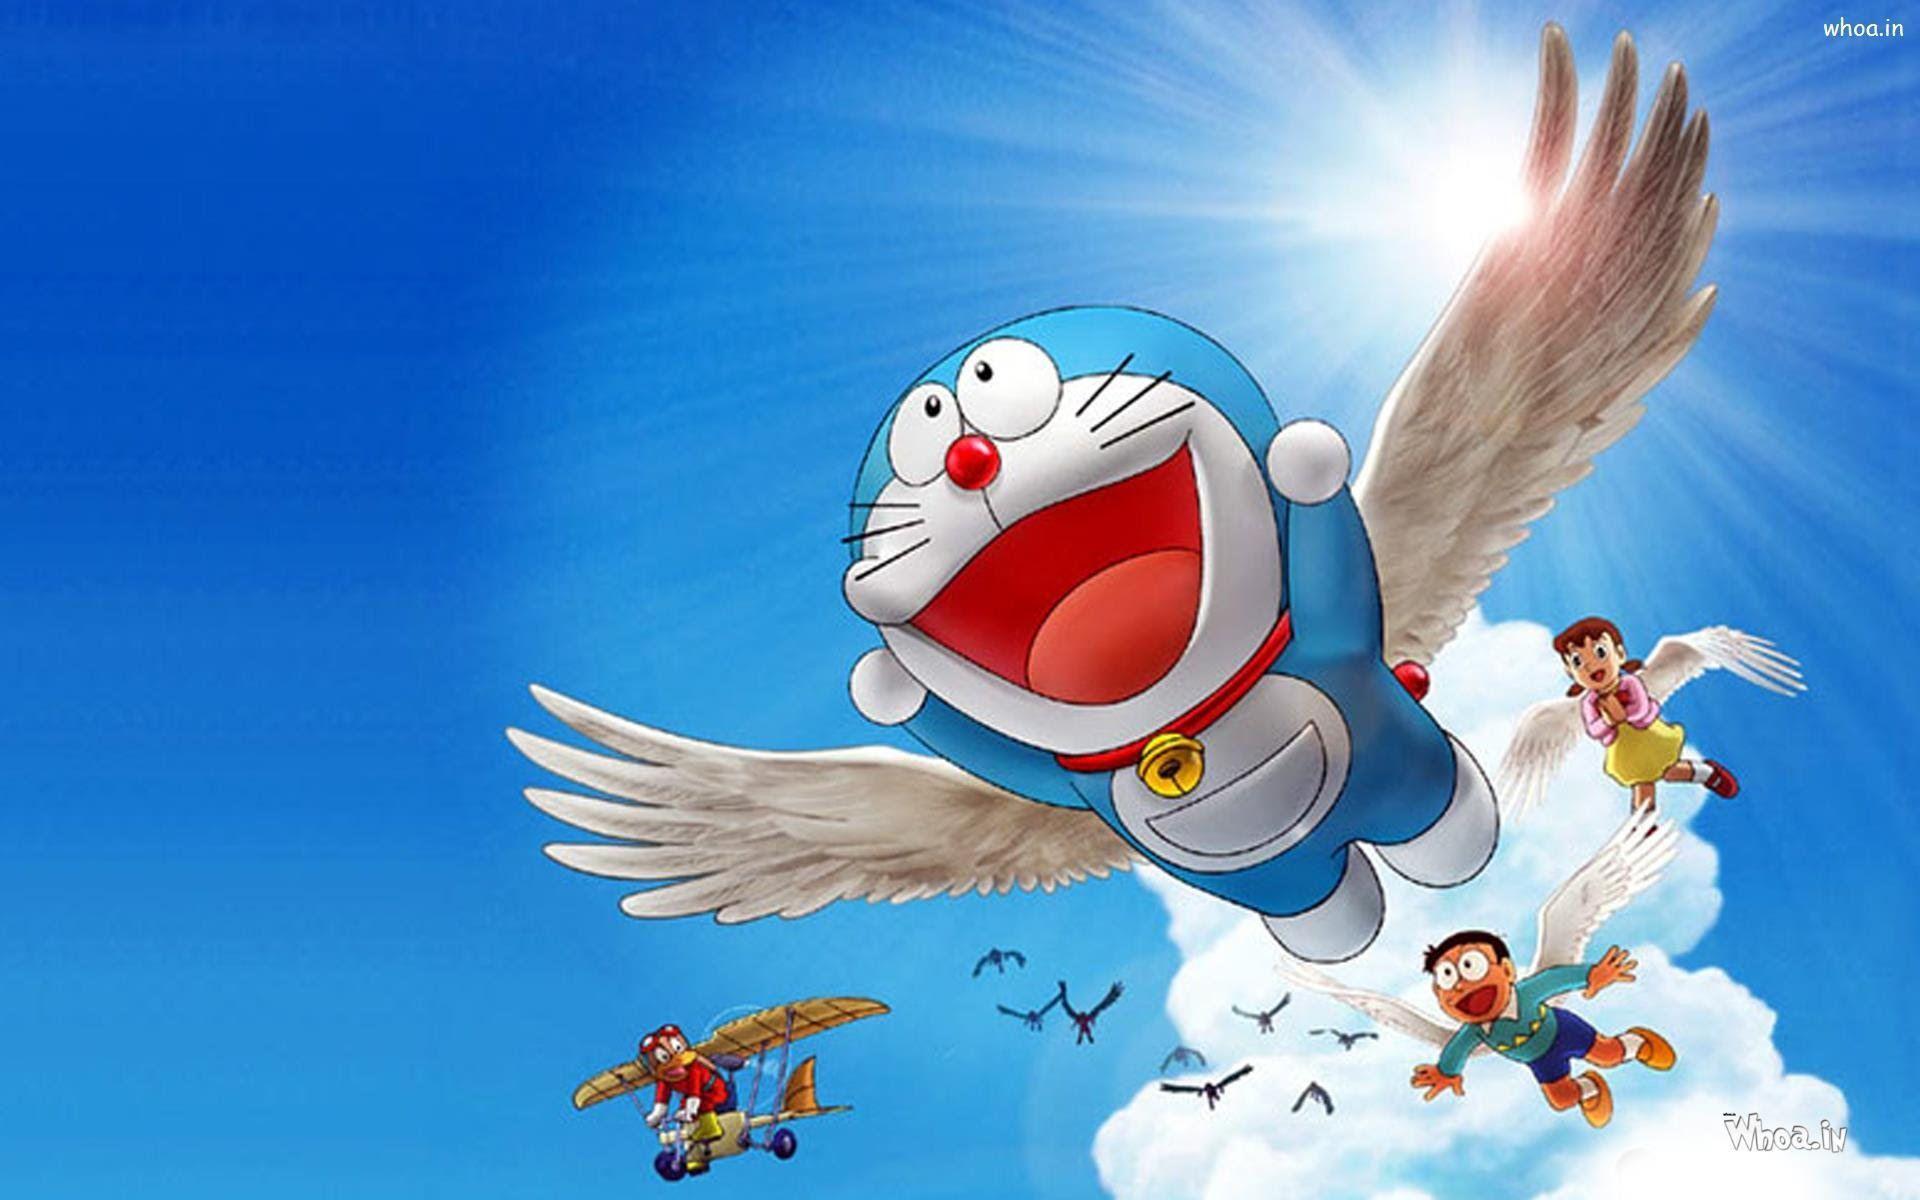 Doraemon in hindi 2016 March 5 New episode